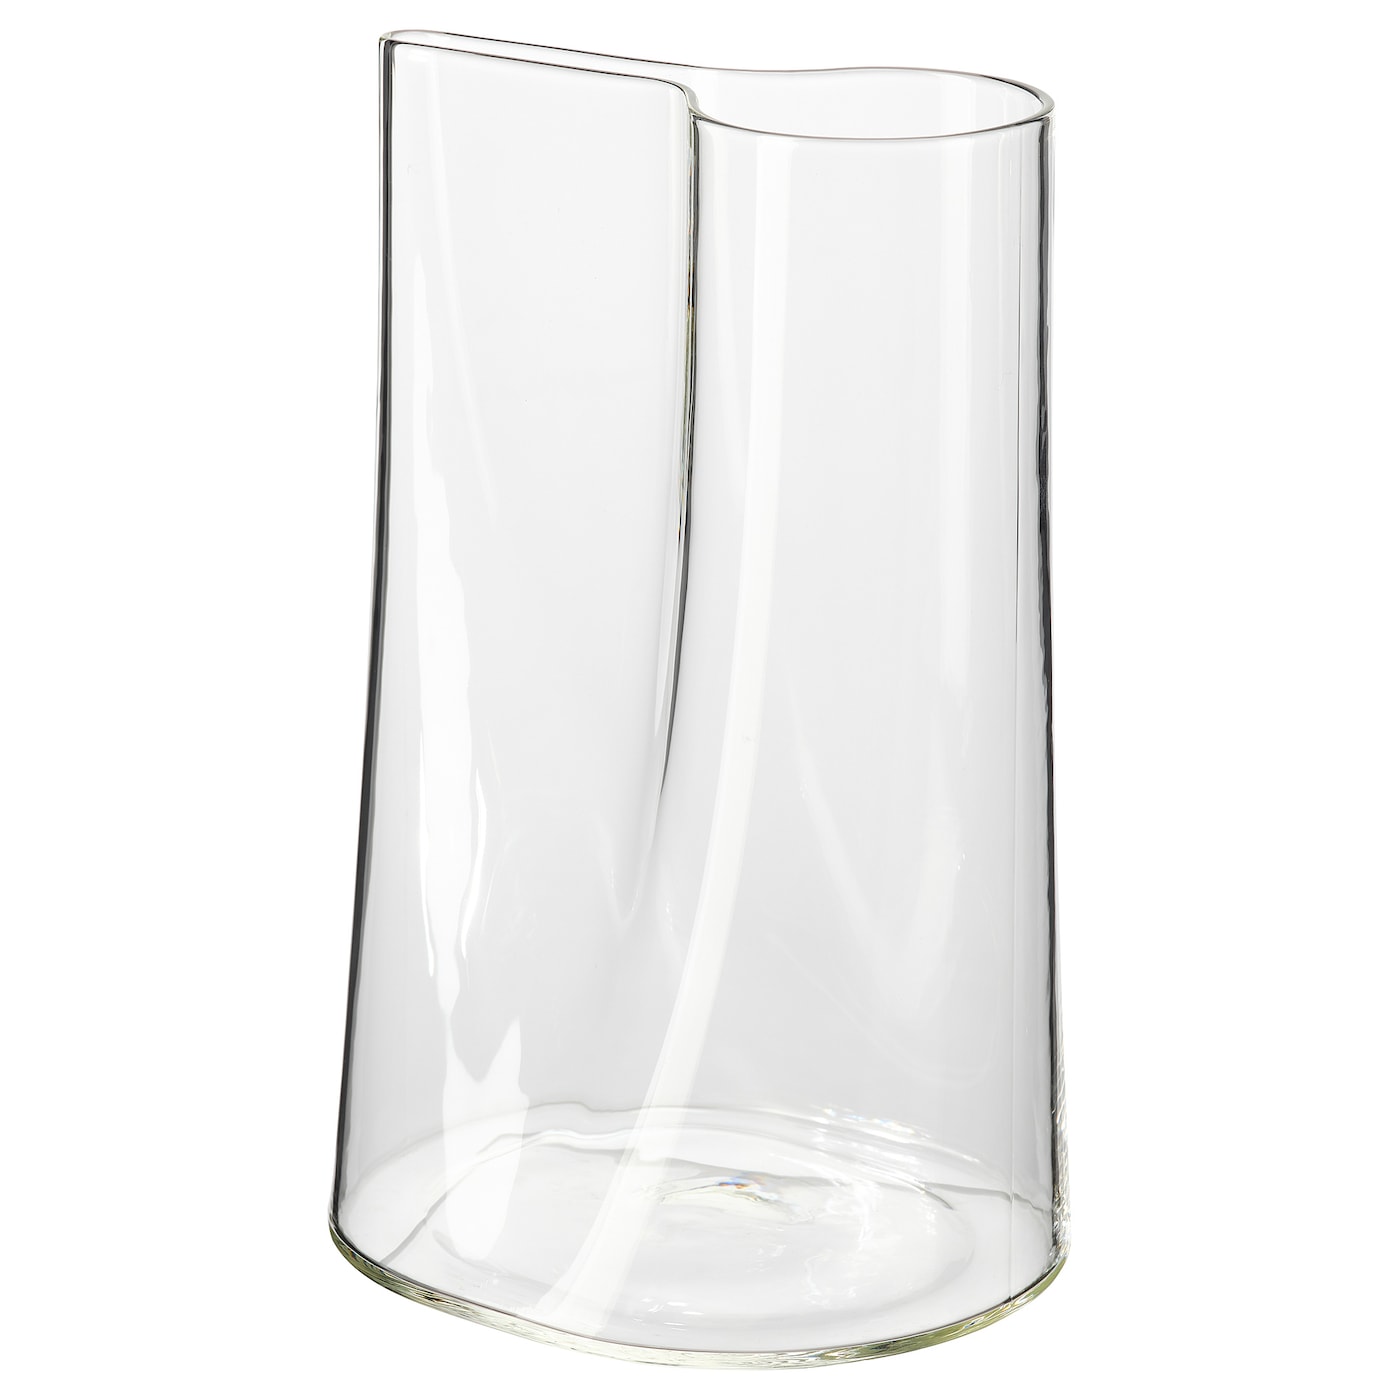 Стеклянная ваза - CHILIFRUKT IKEA/ ЧИЛИФРУКТ ИКЕА, 21 см, стекло